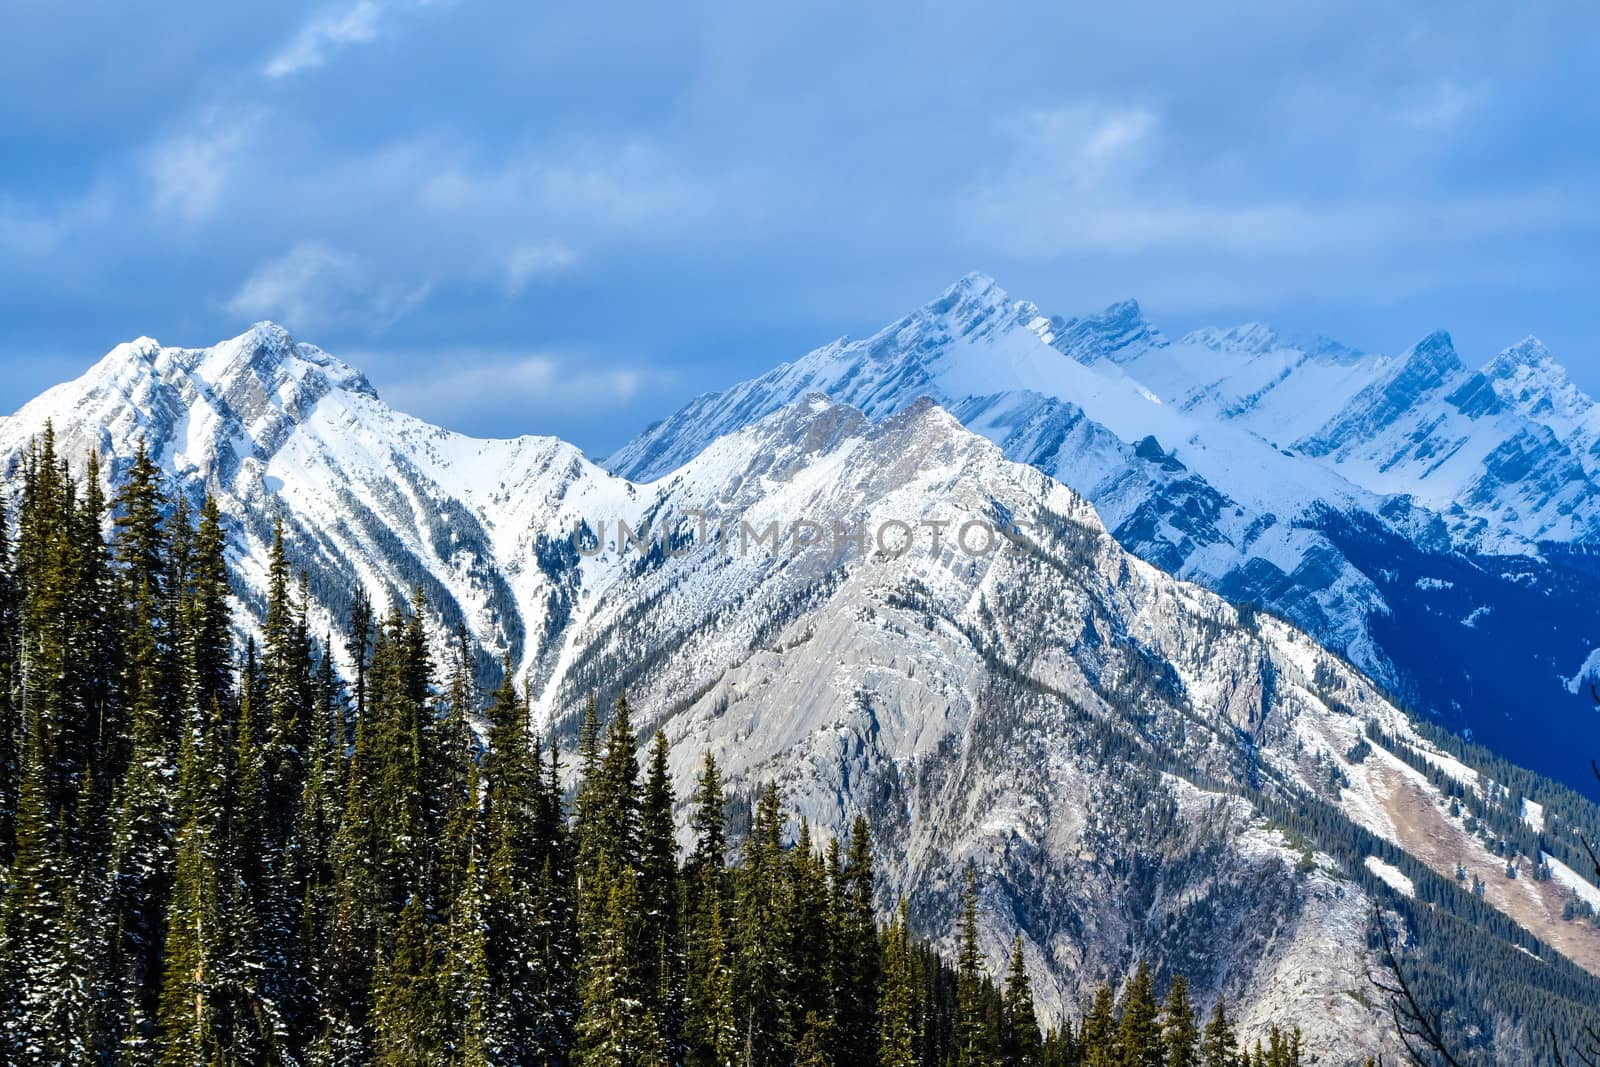 Canadian Rockies - Banff, Alberta, Canada by cestes001